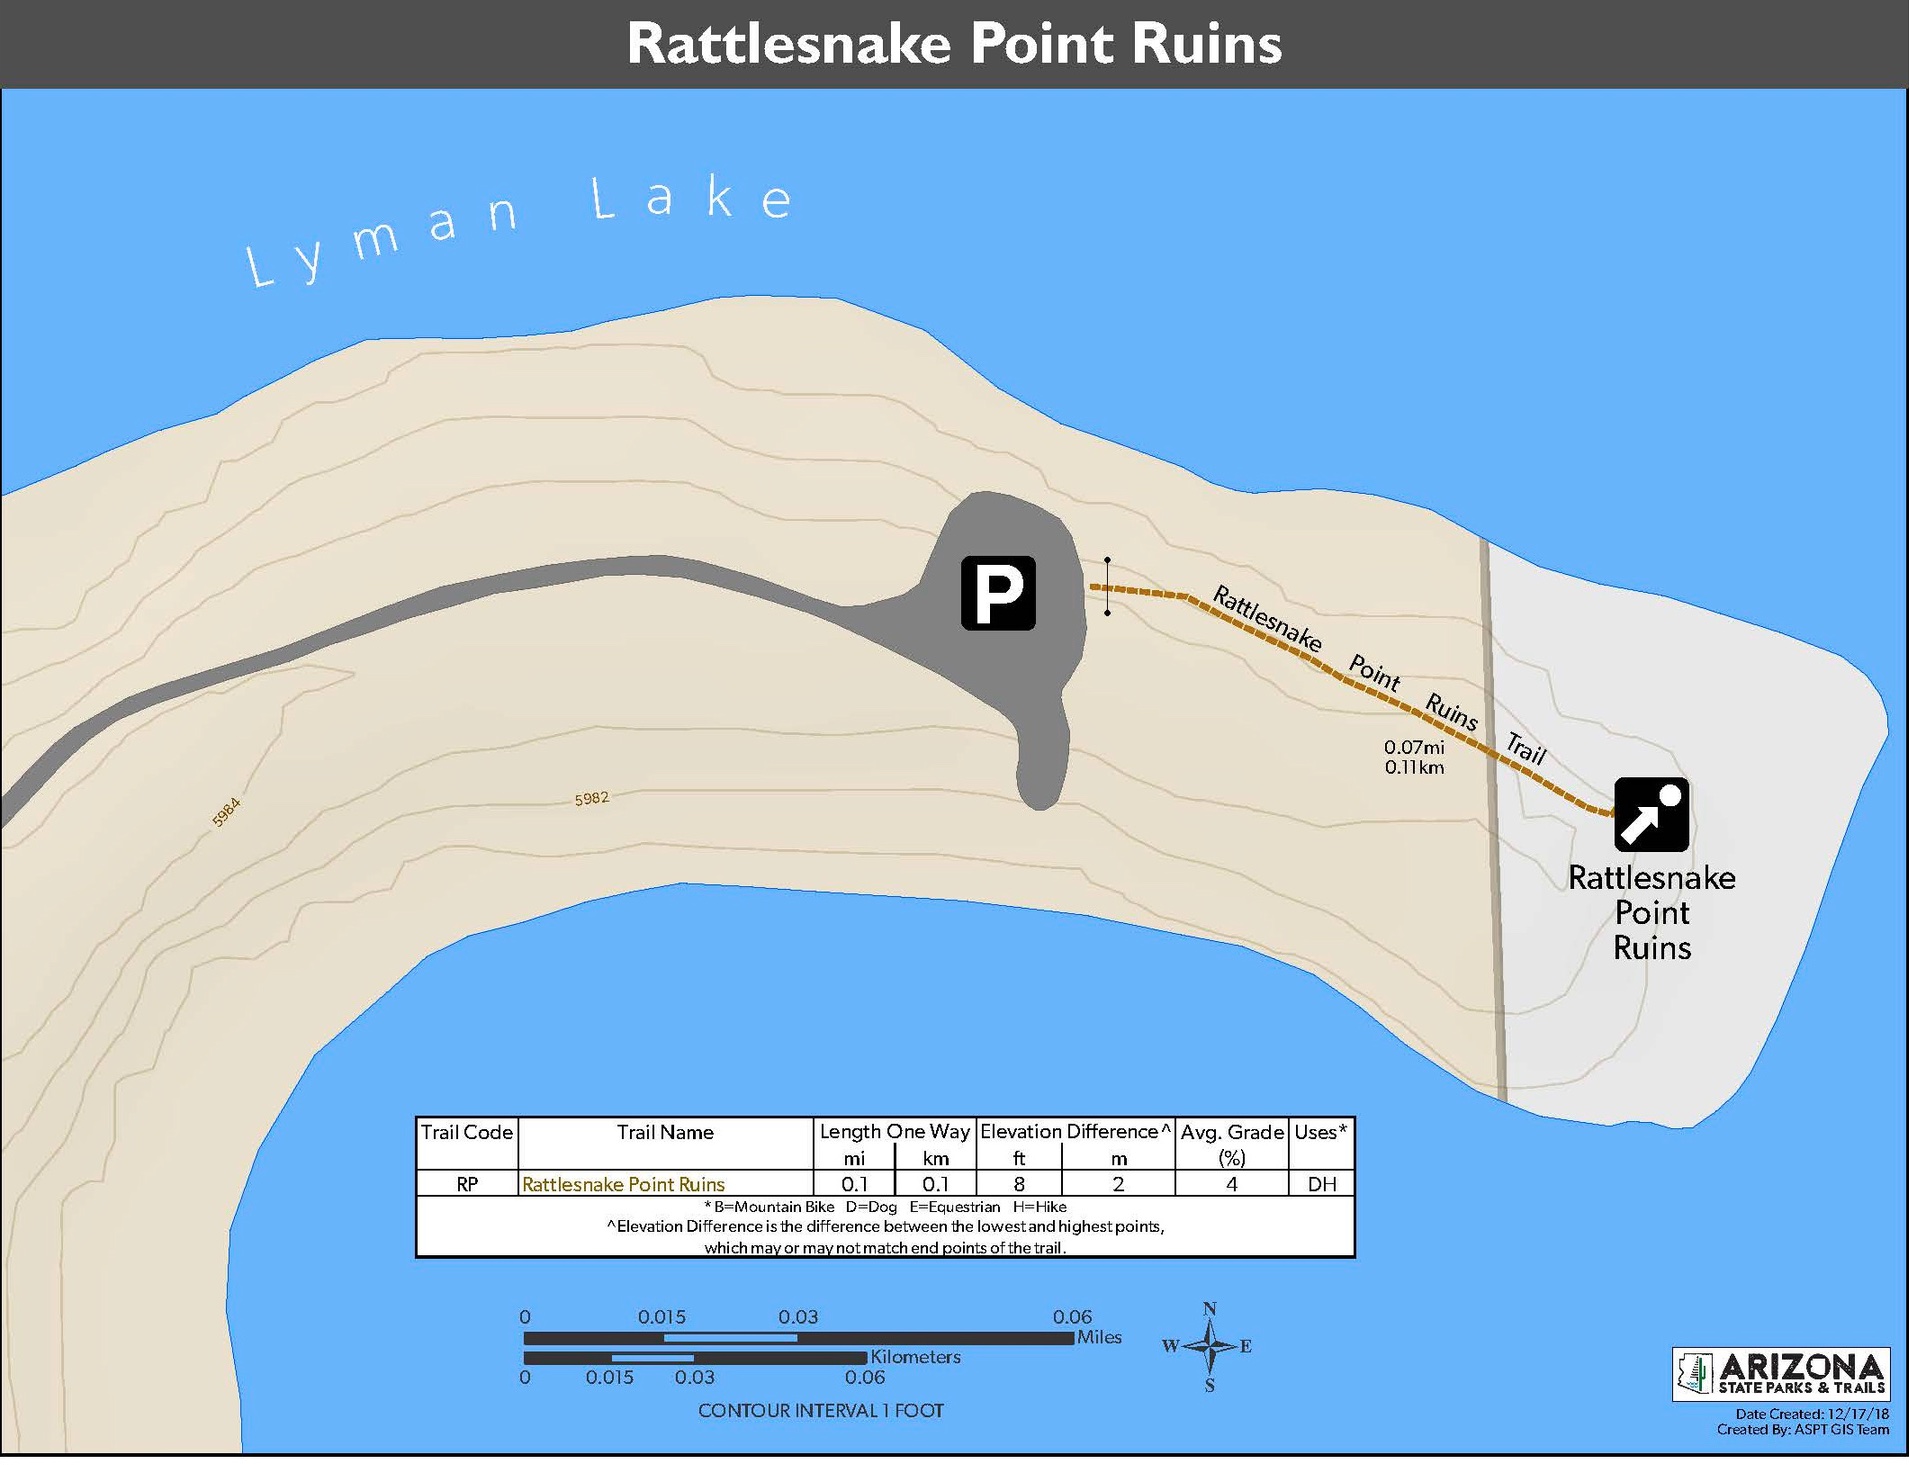 A GIS map of the Rattlesnake Point Pueblo at Lyman Lake